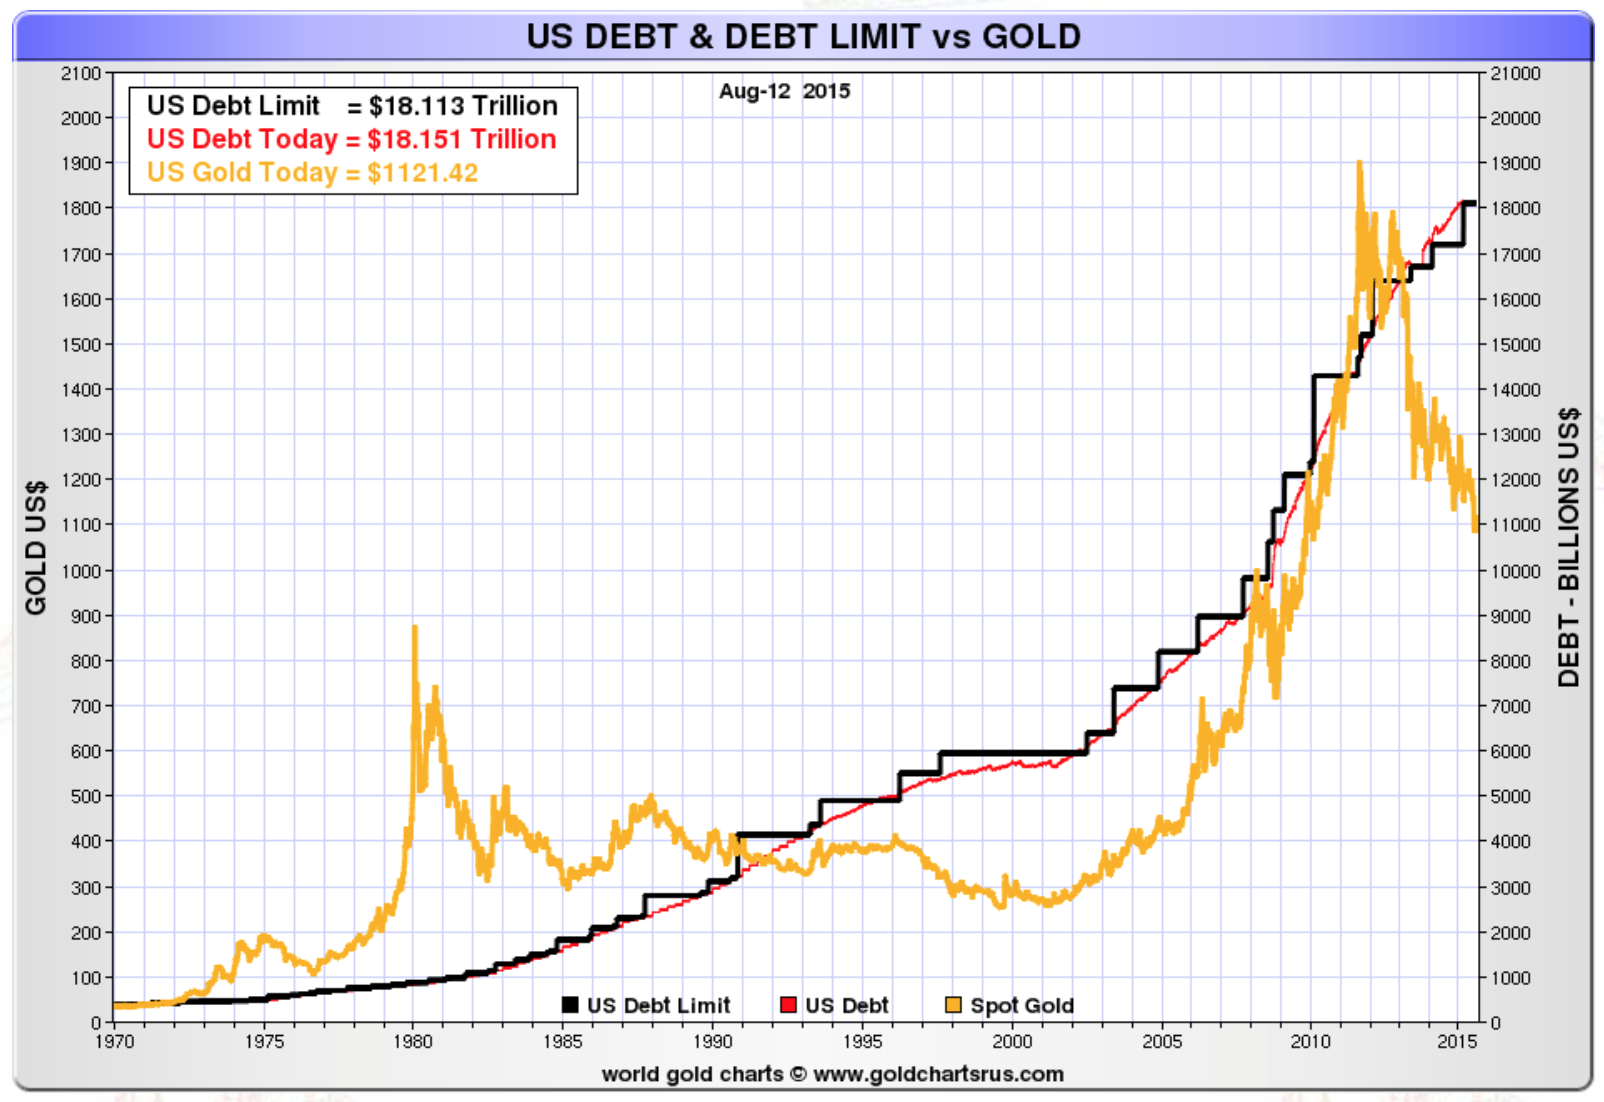 US debt and debt limit vs gold